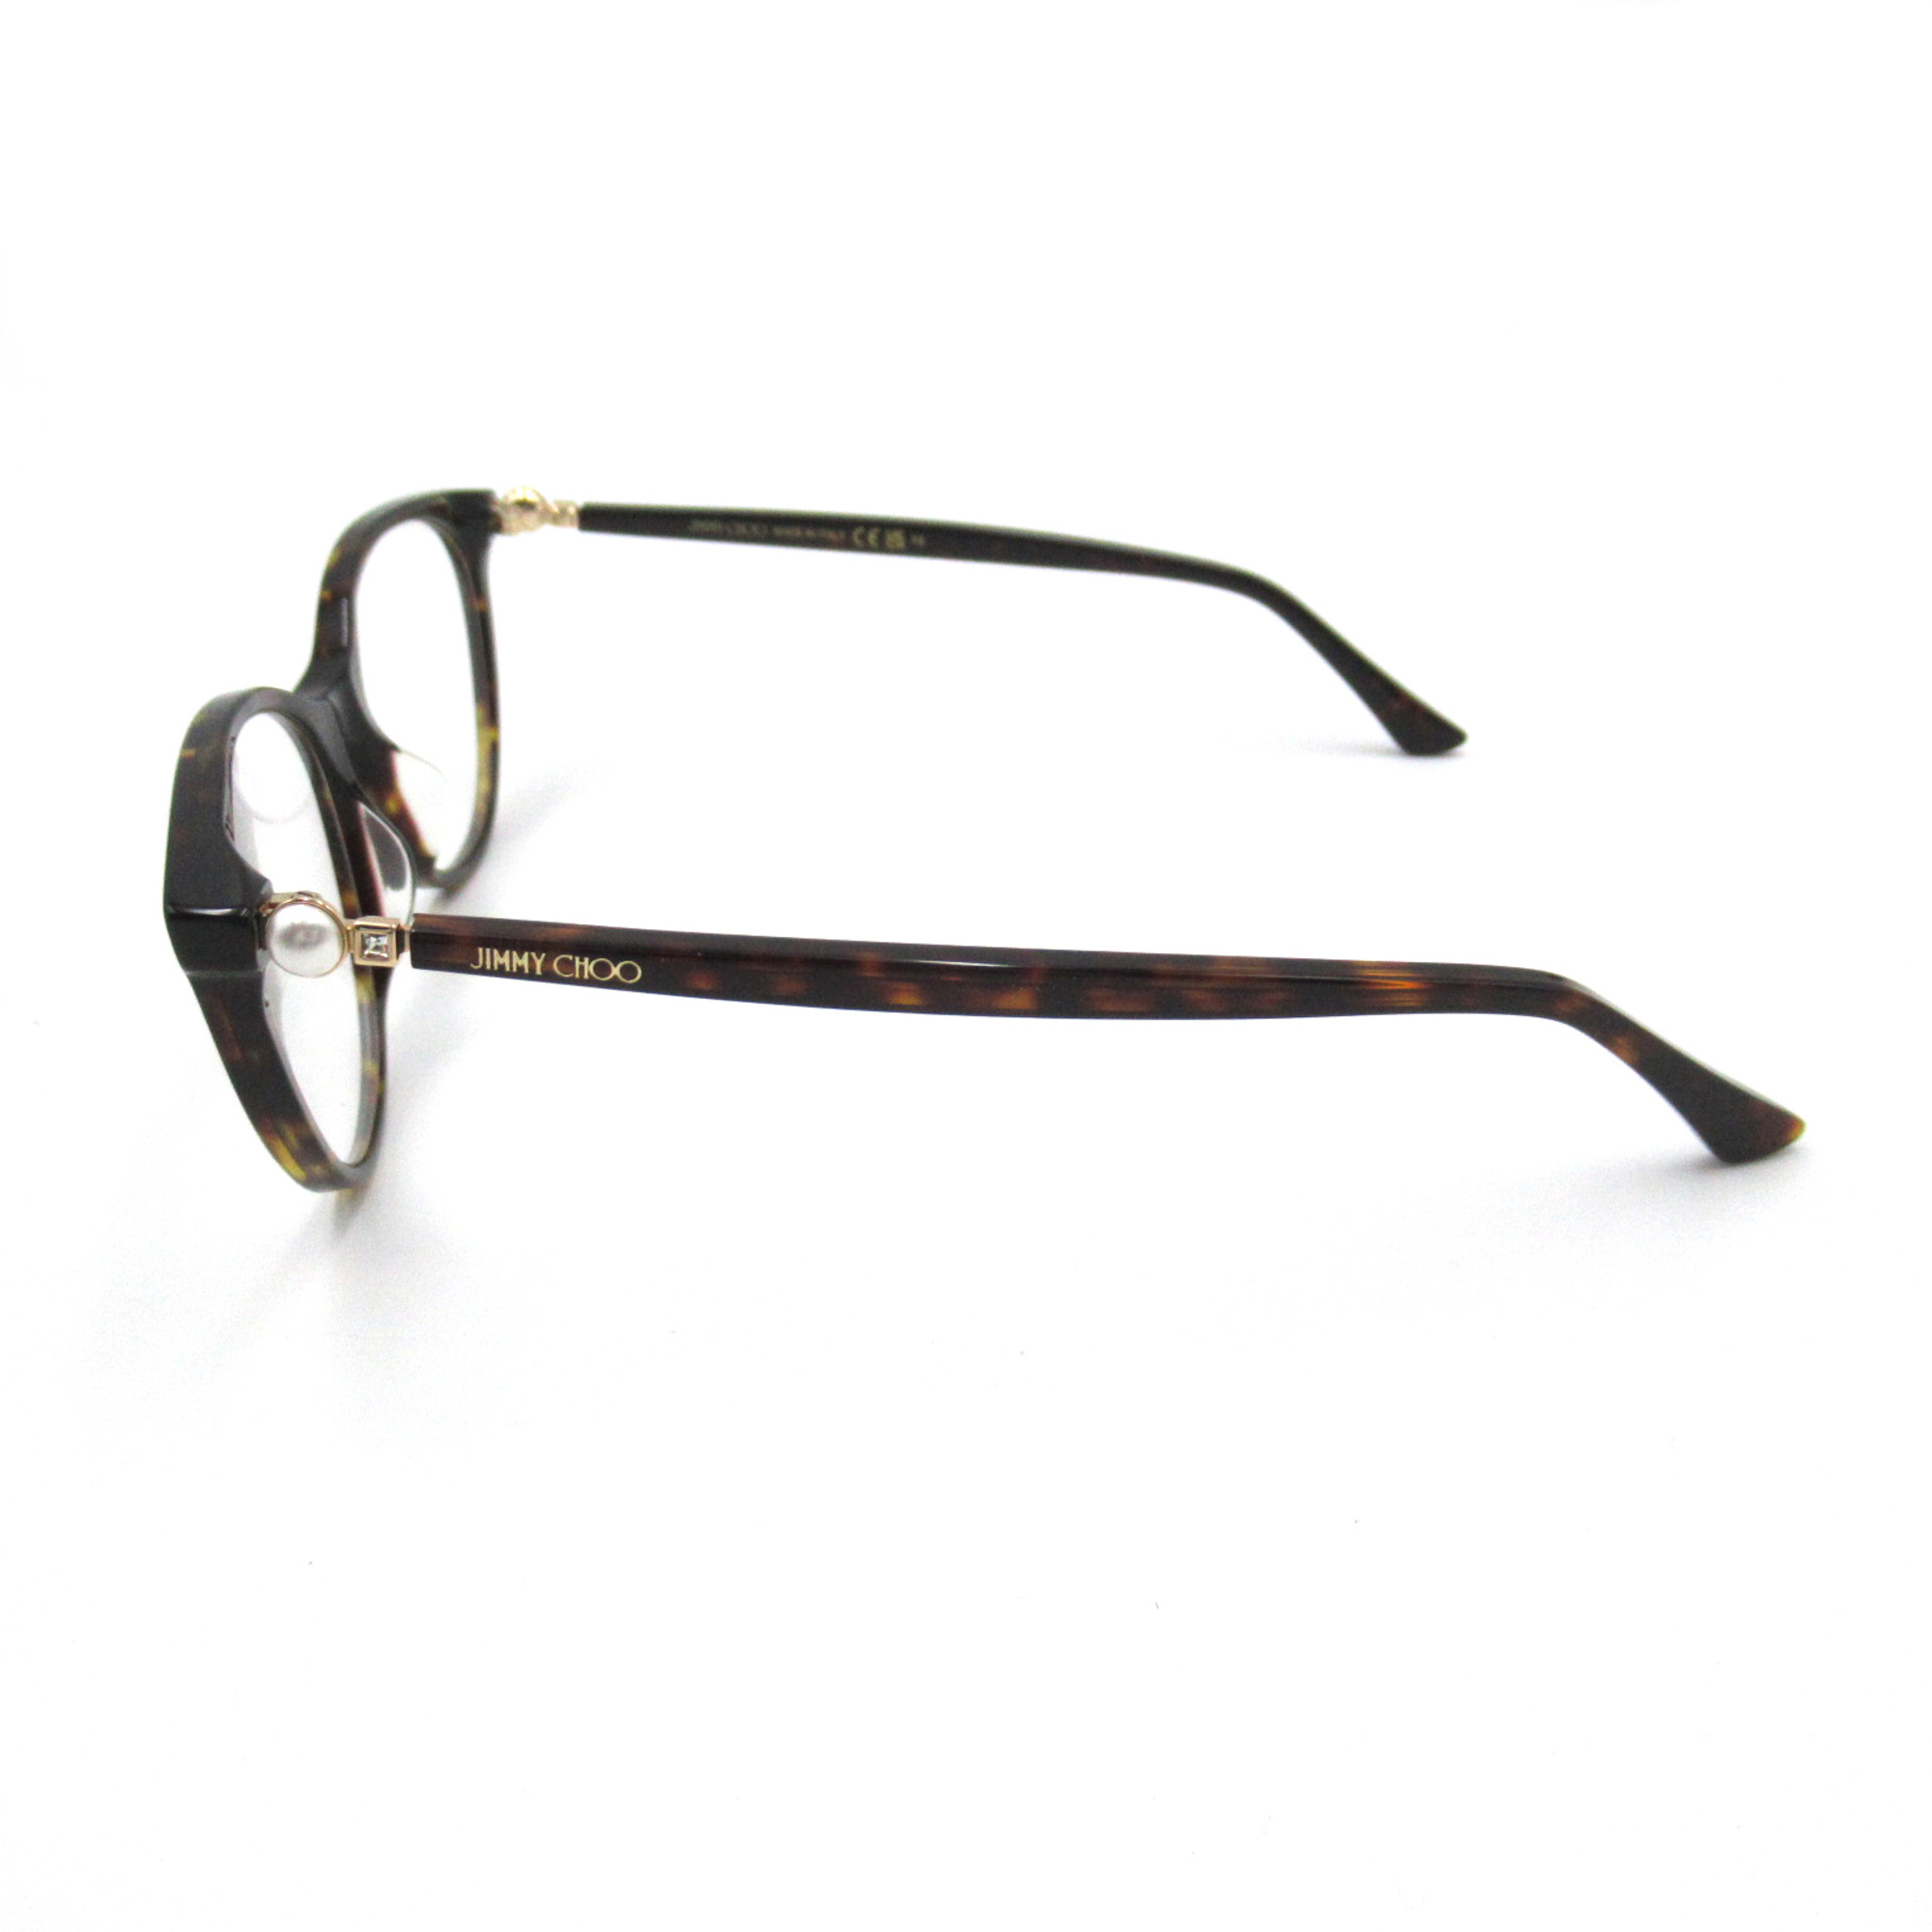 JIMMY CHOO Date Glasses Glasses Frame Brown Plastic 378/G 086(53)